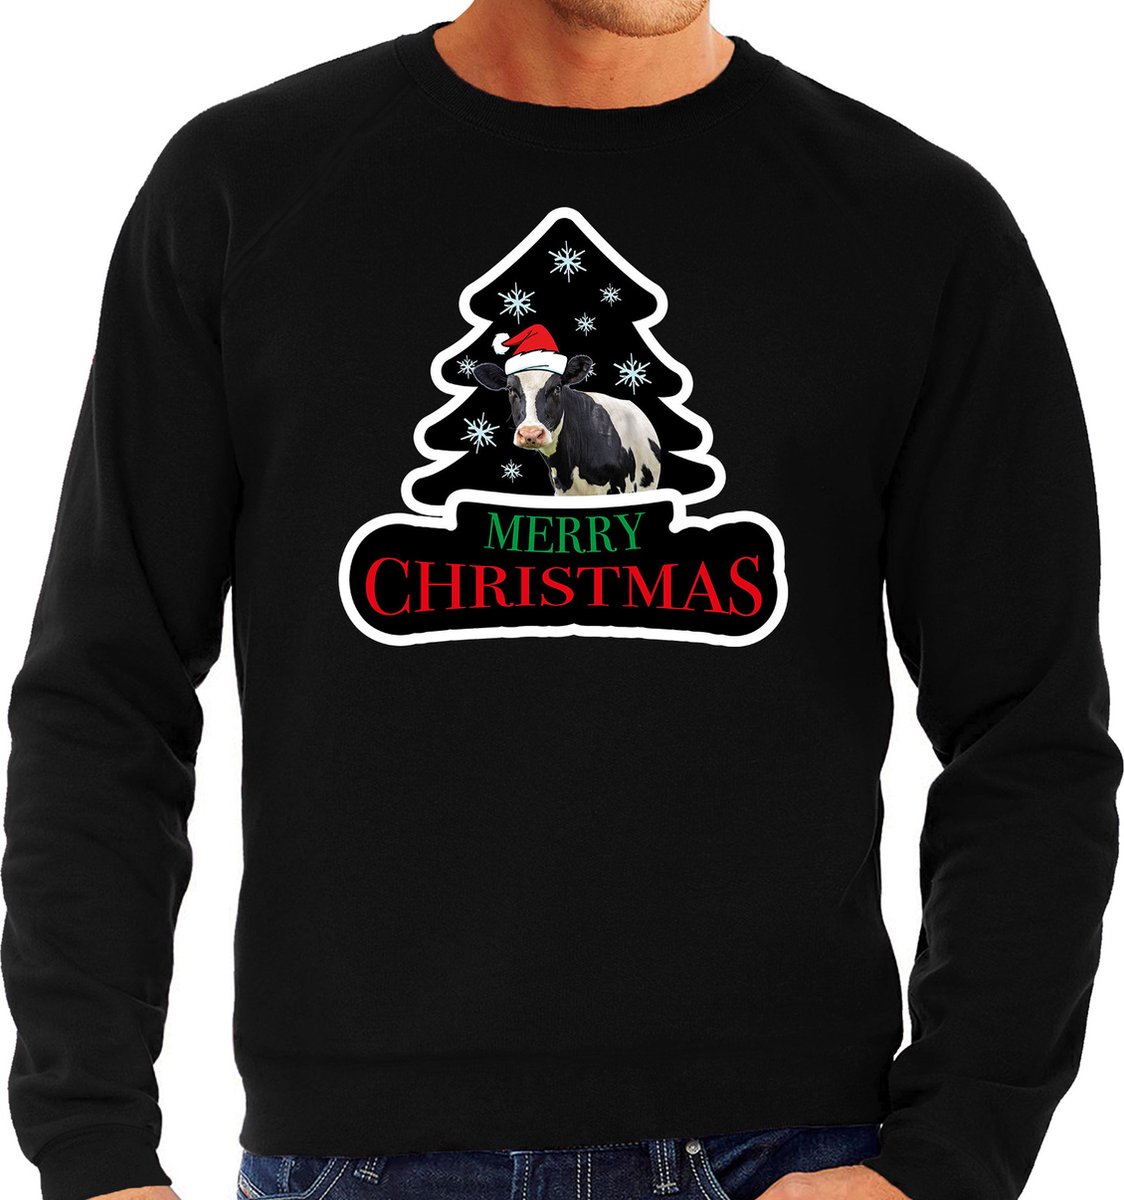 Dieren kersttrui koe zwart heren - Foute koeien kerstsweater - Kerst outfit dieren liefhebber XL